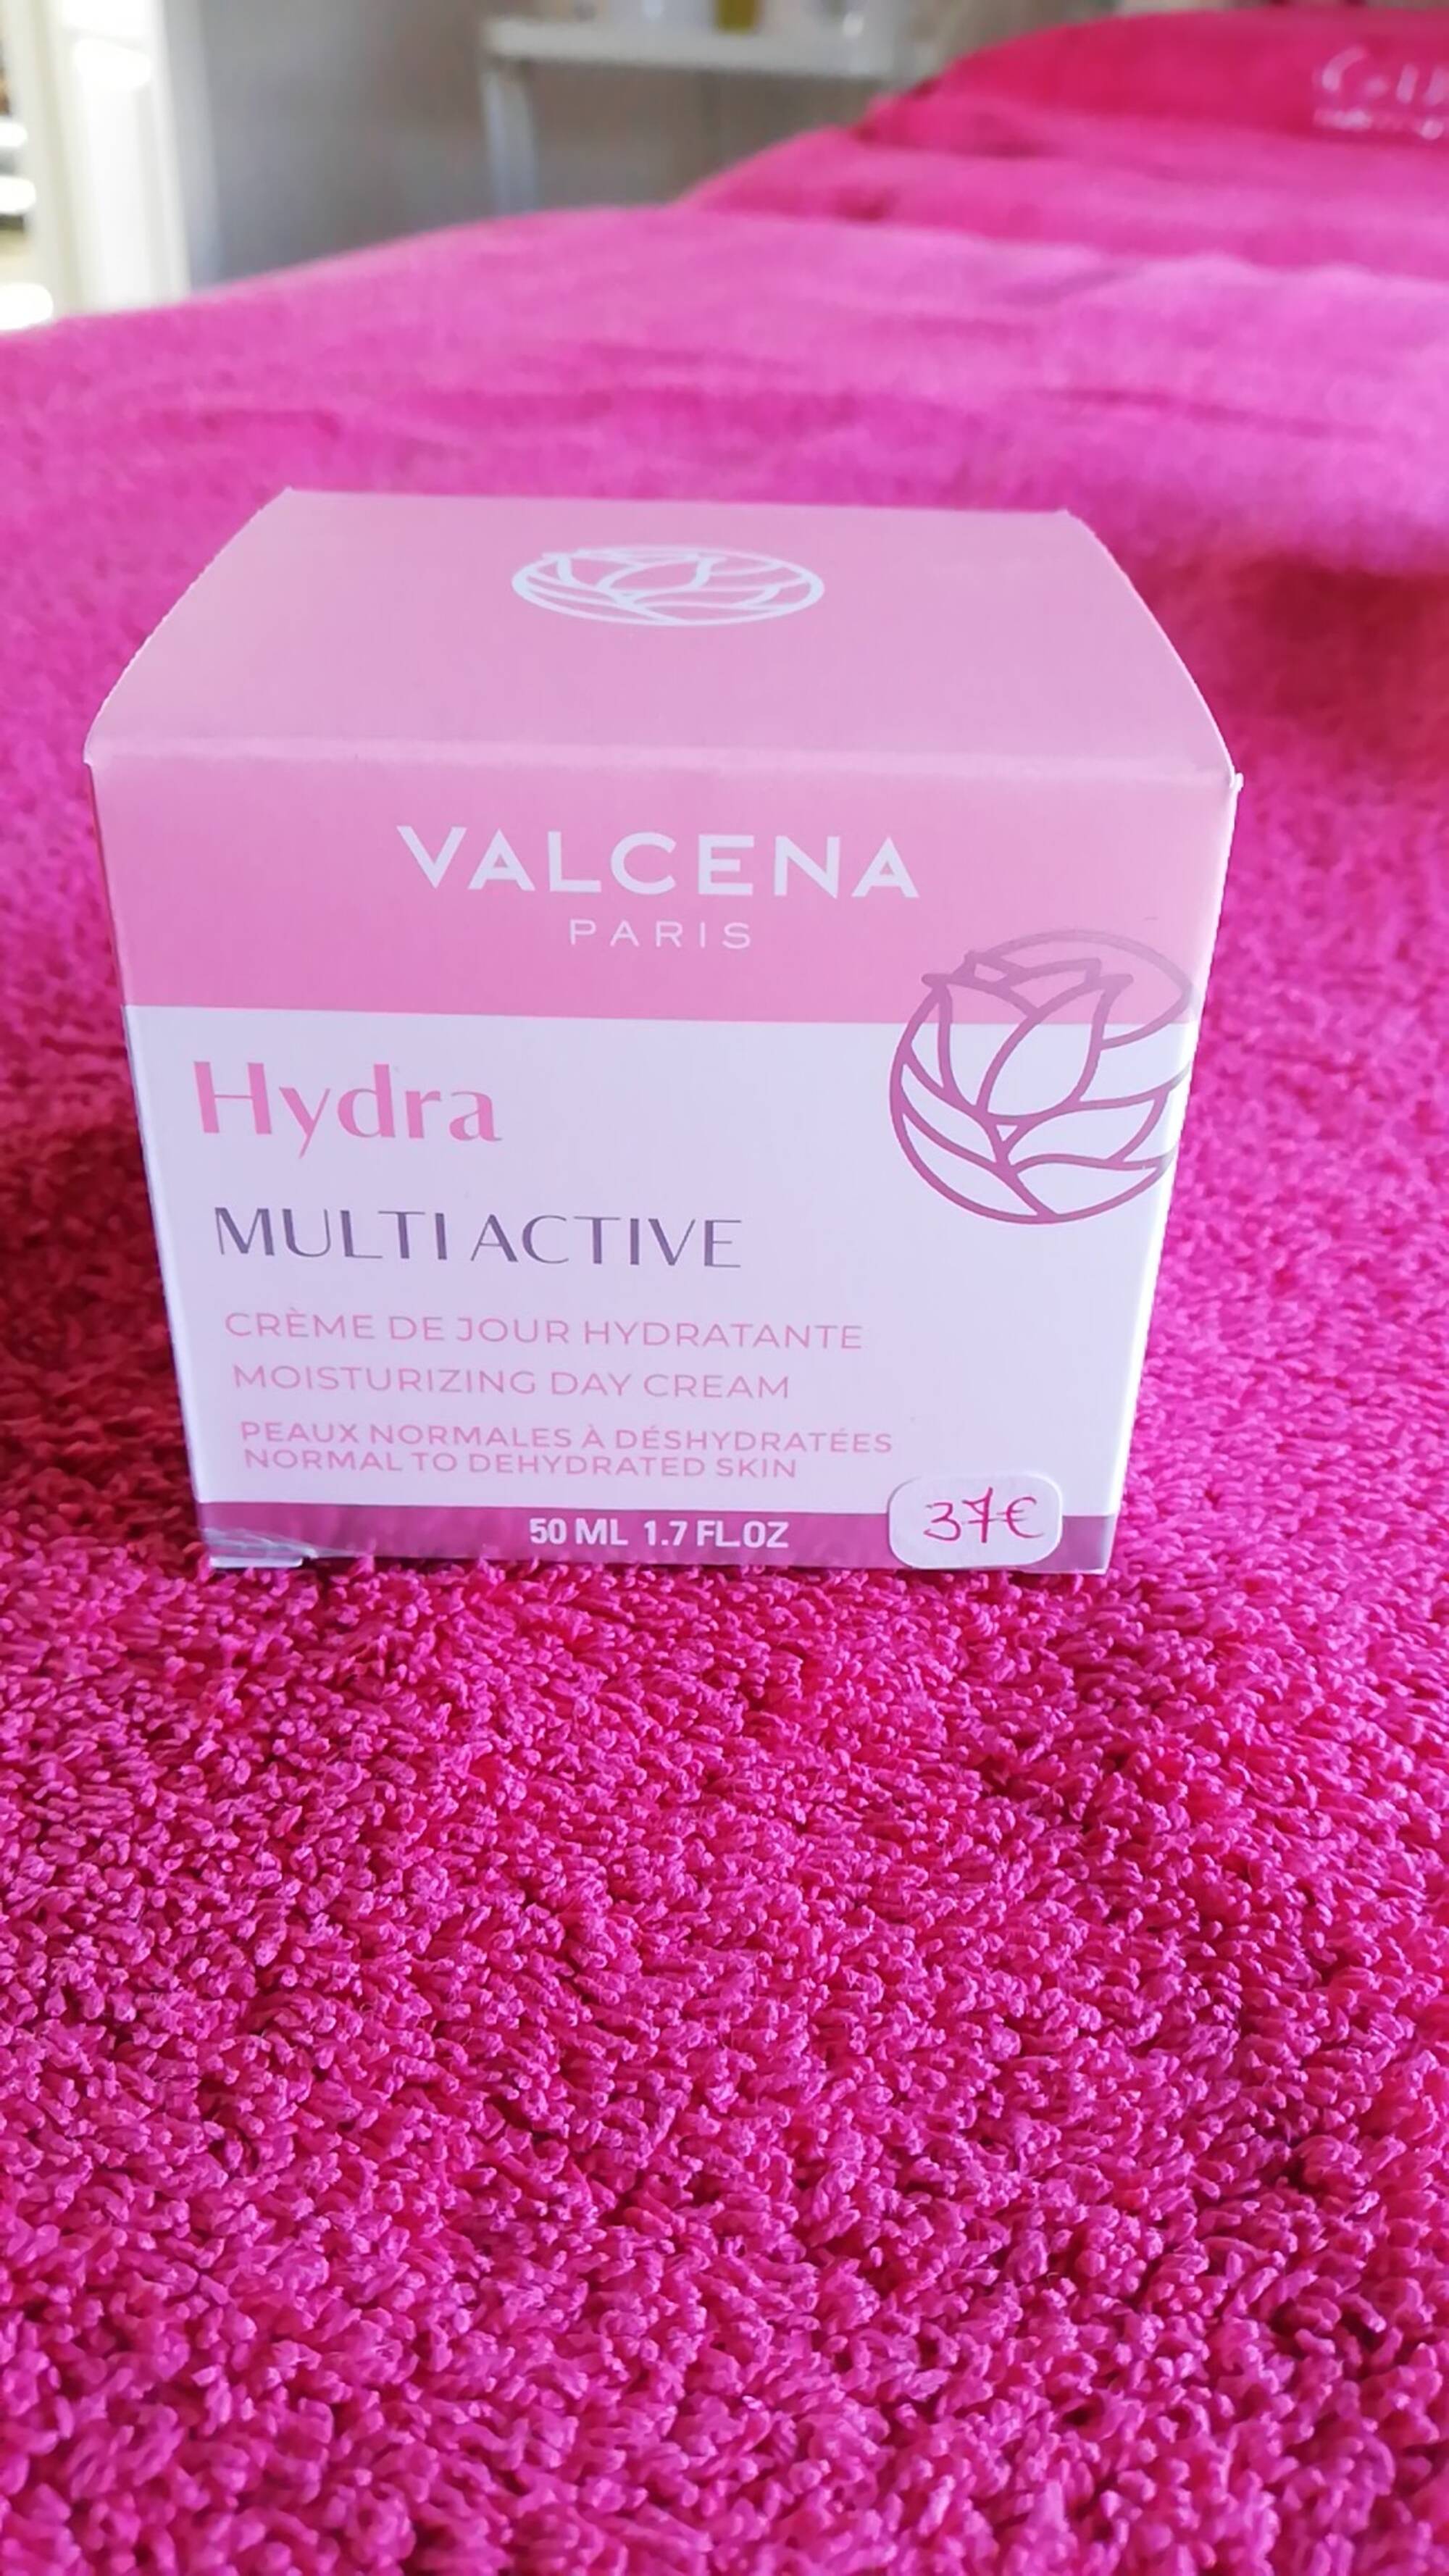 VALCENA - Hydra Multiactive - Crème du jour hydratante